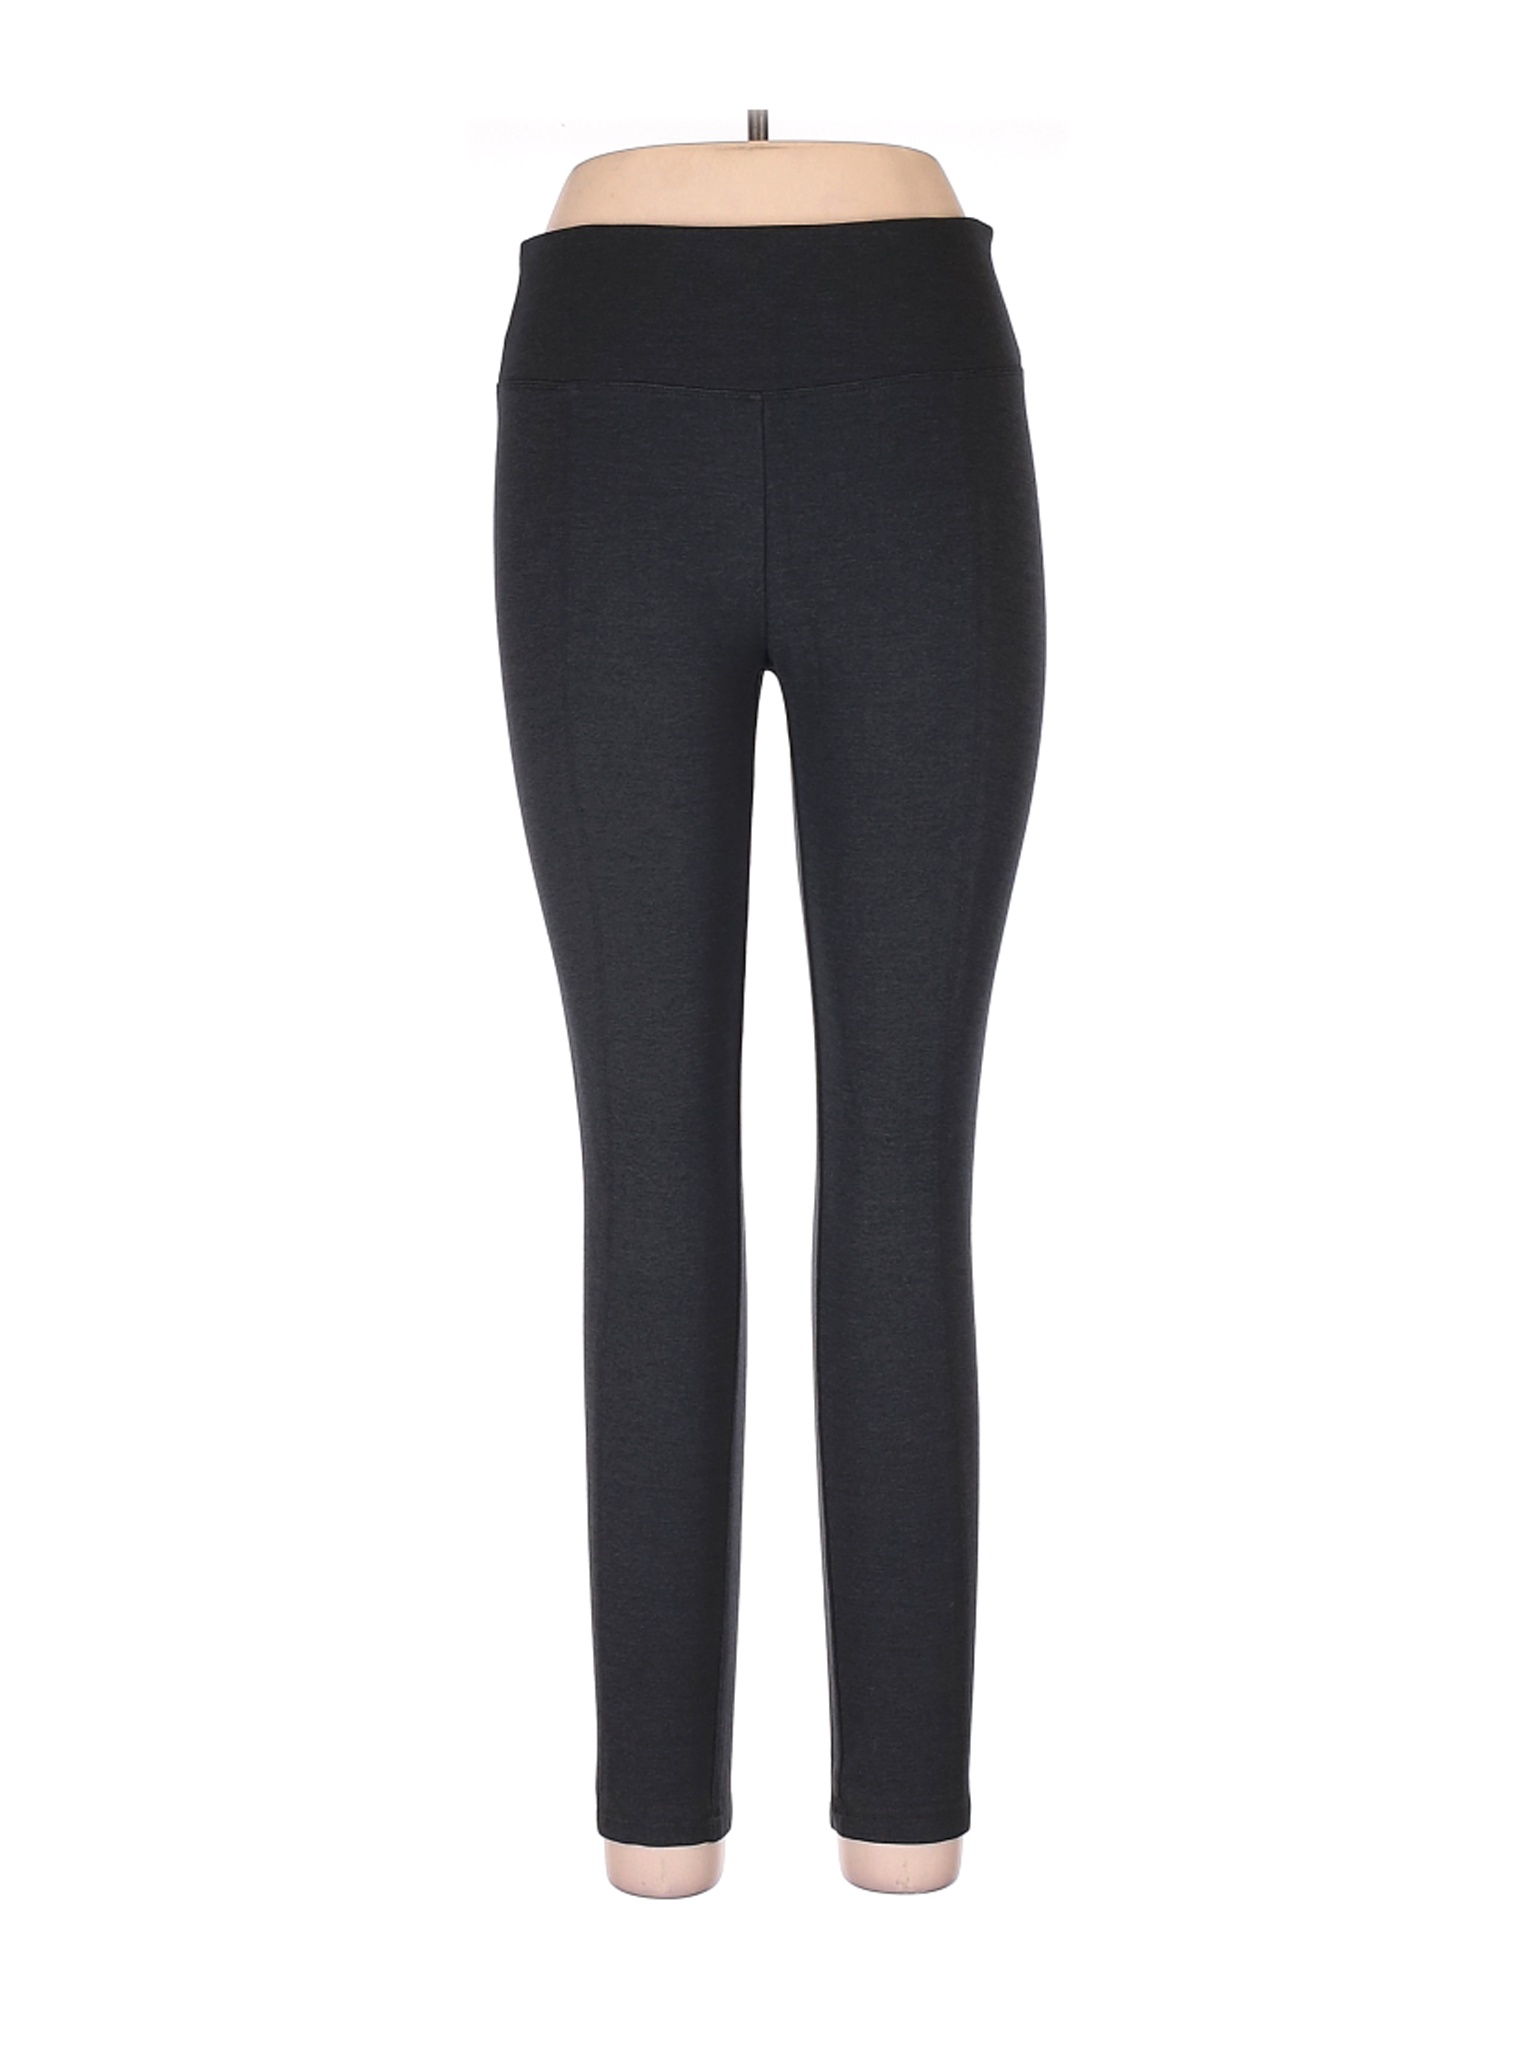 Shinestar Women Black Active Pants L | eBay